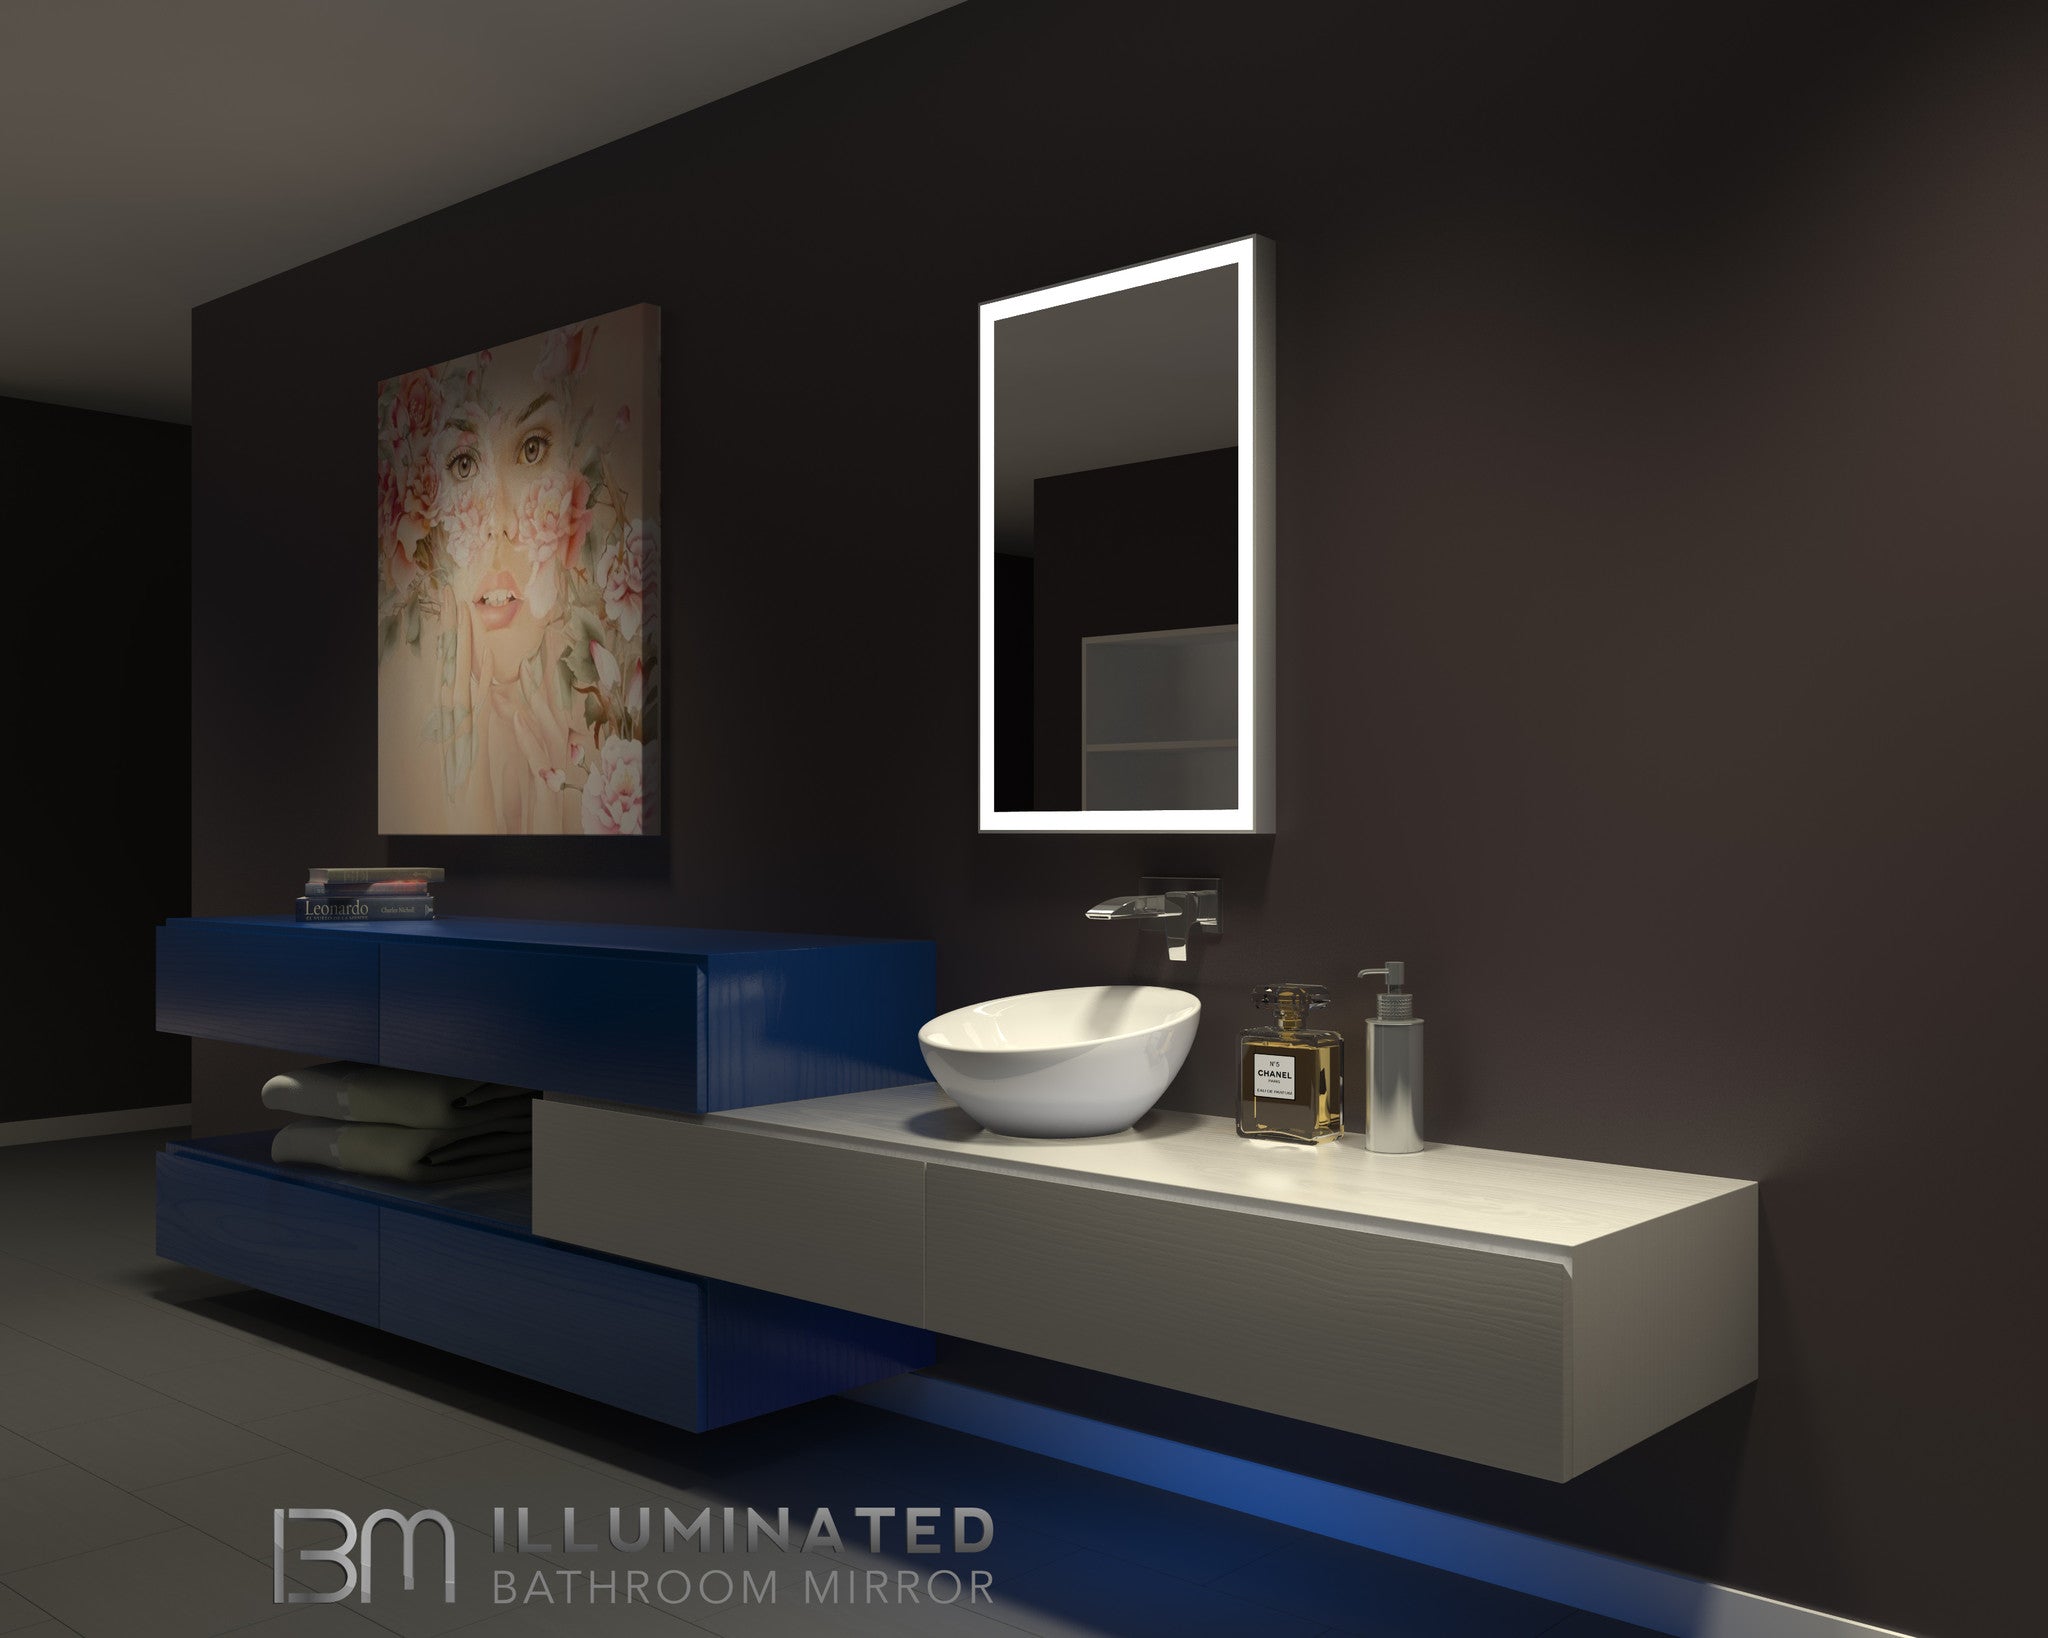 Dimmable Lighted bathroom mirror Galaxy 24 x 36 – IB mirror